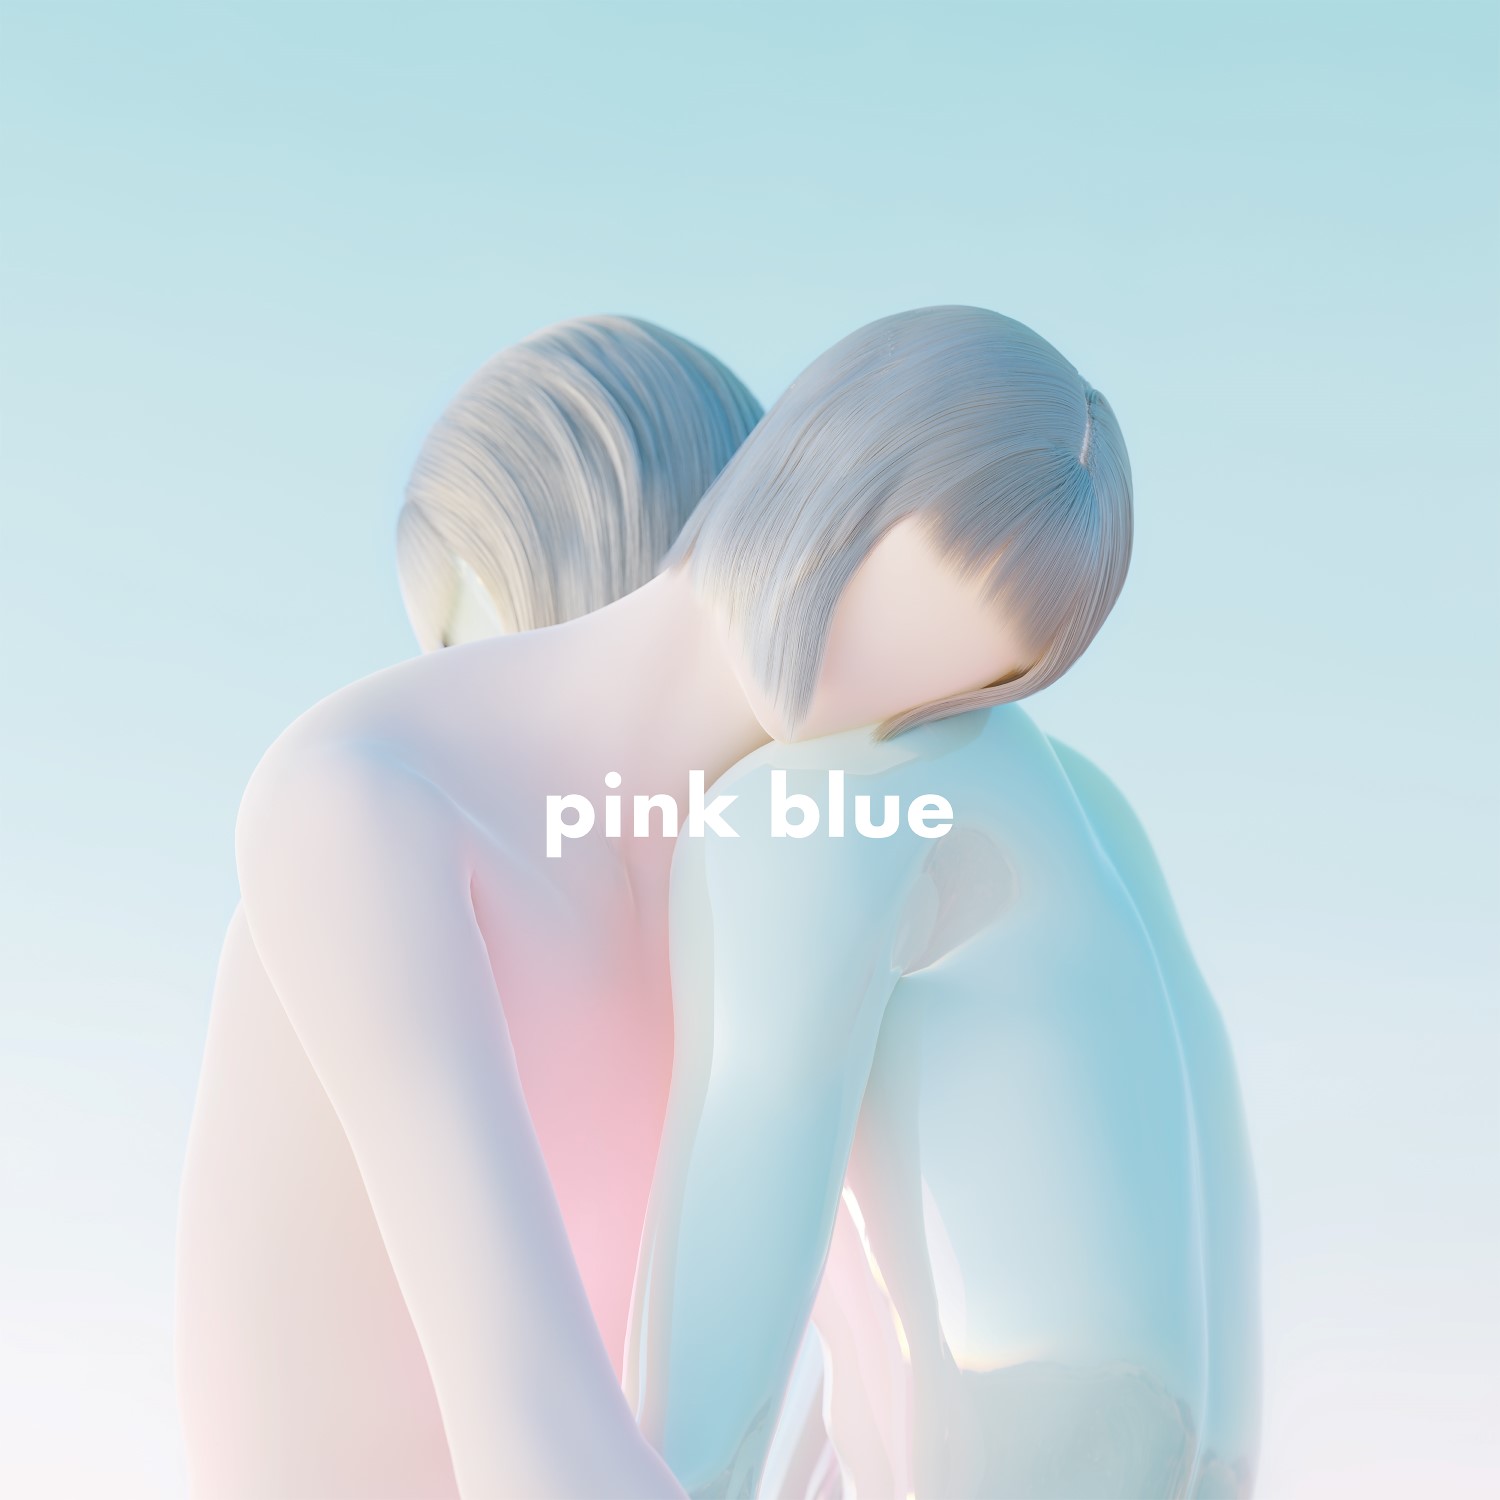 『pink blue』通常盤ジャケット